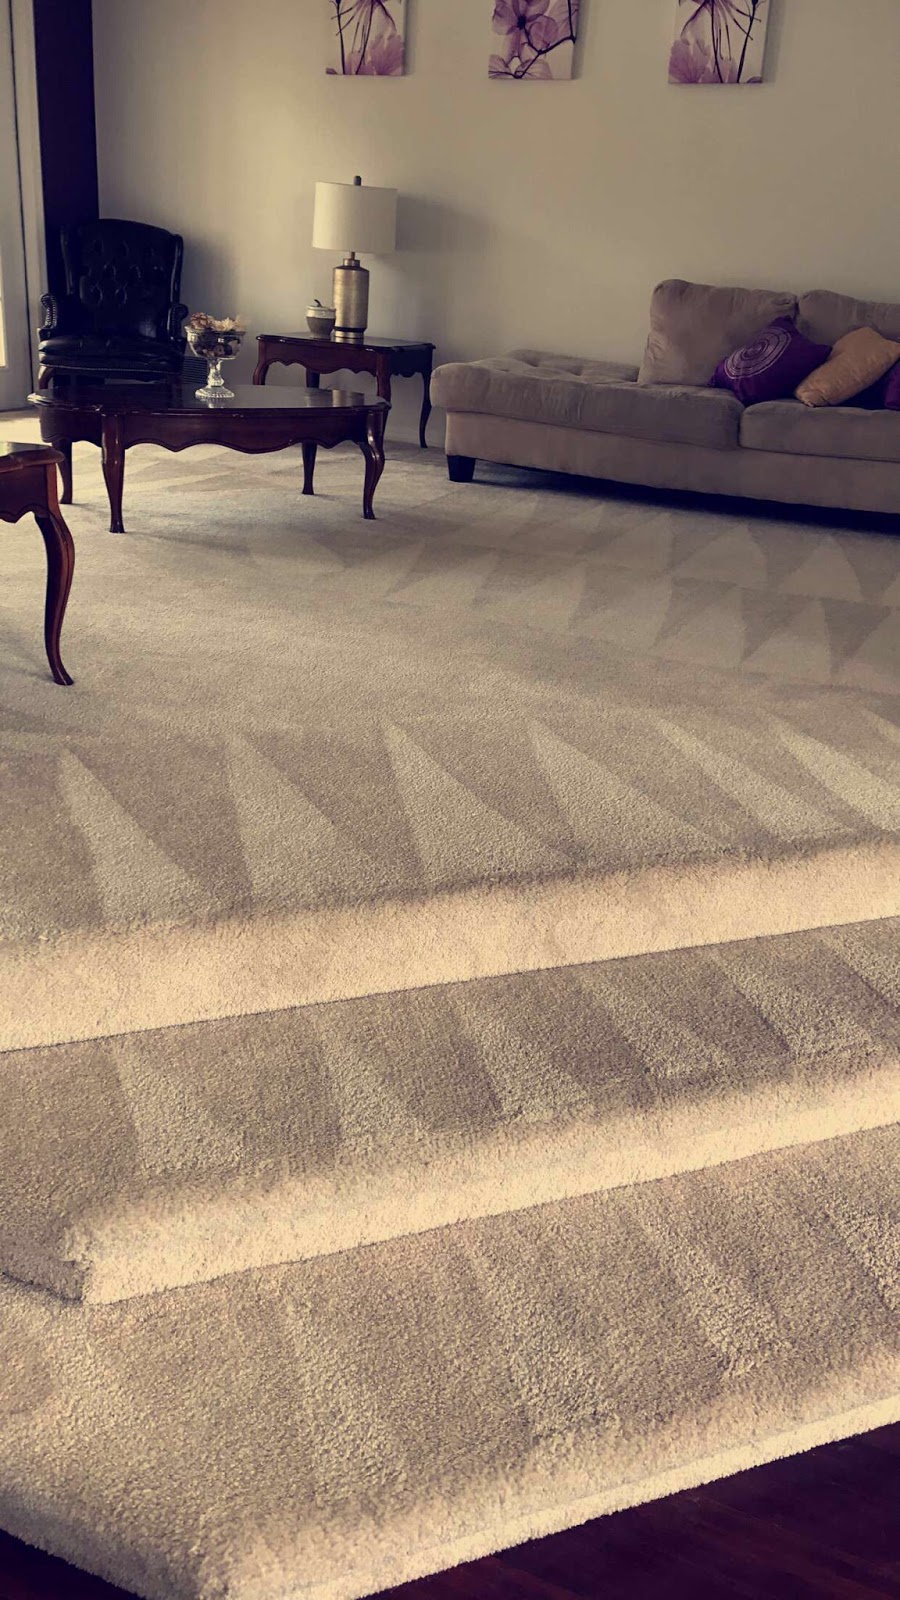 Suncoast Carpet & Tile Cleaning | 3926 Oriole Ave, Port Orange, FL 32127, USA | Phone: (386) 341-4871